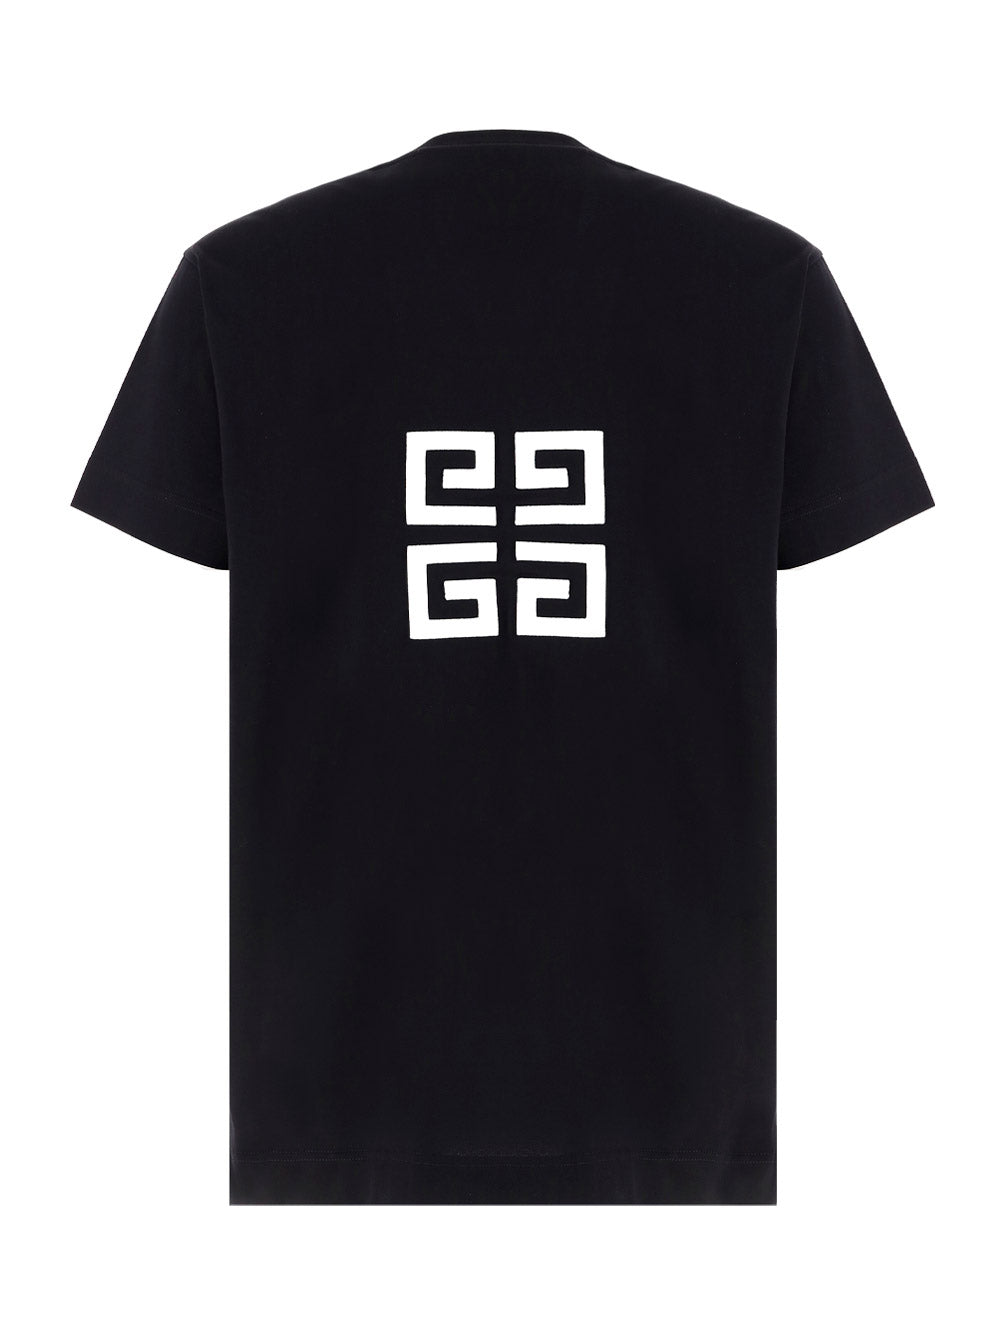 Embroidered Oversized T-Shirt - Black / White